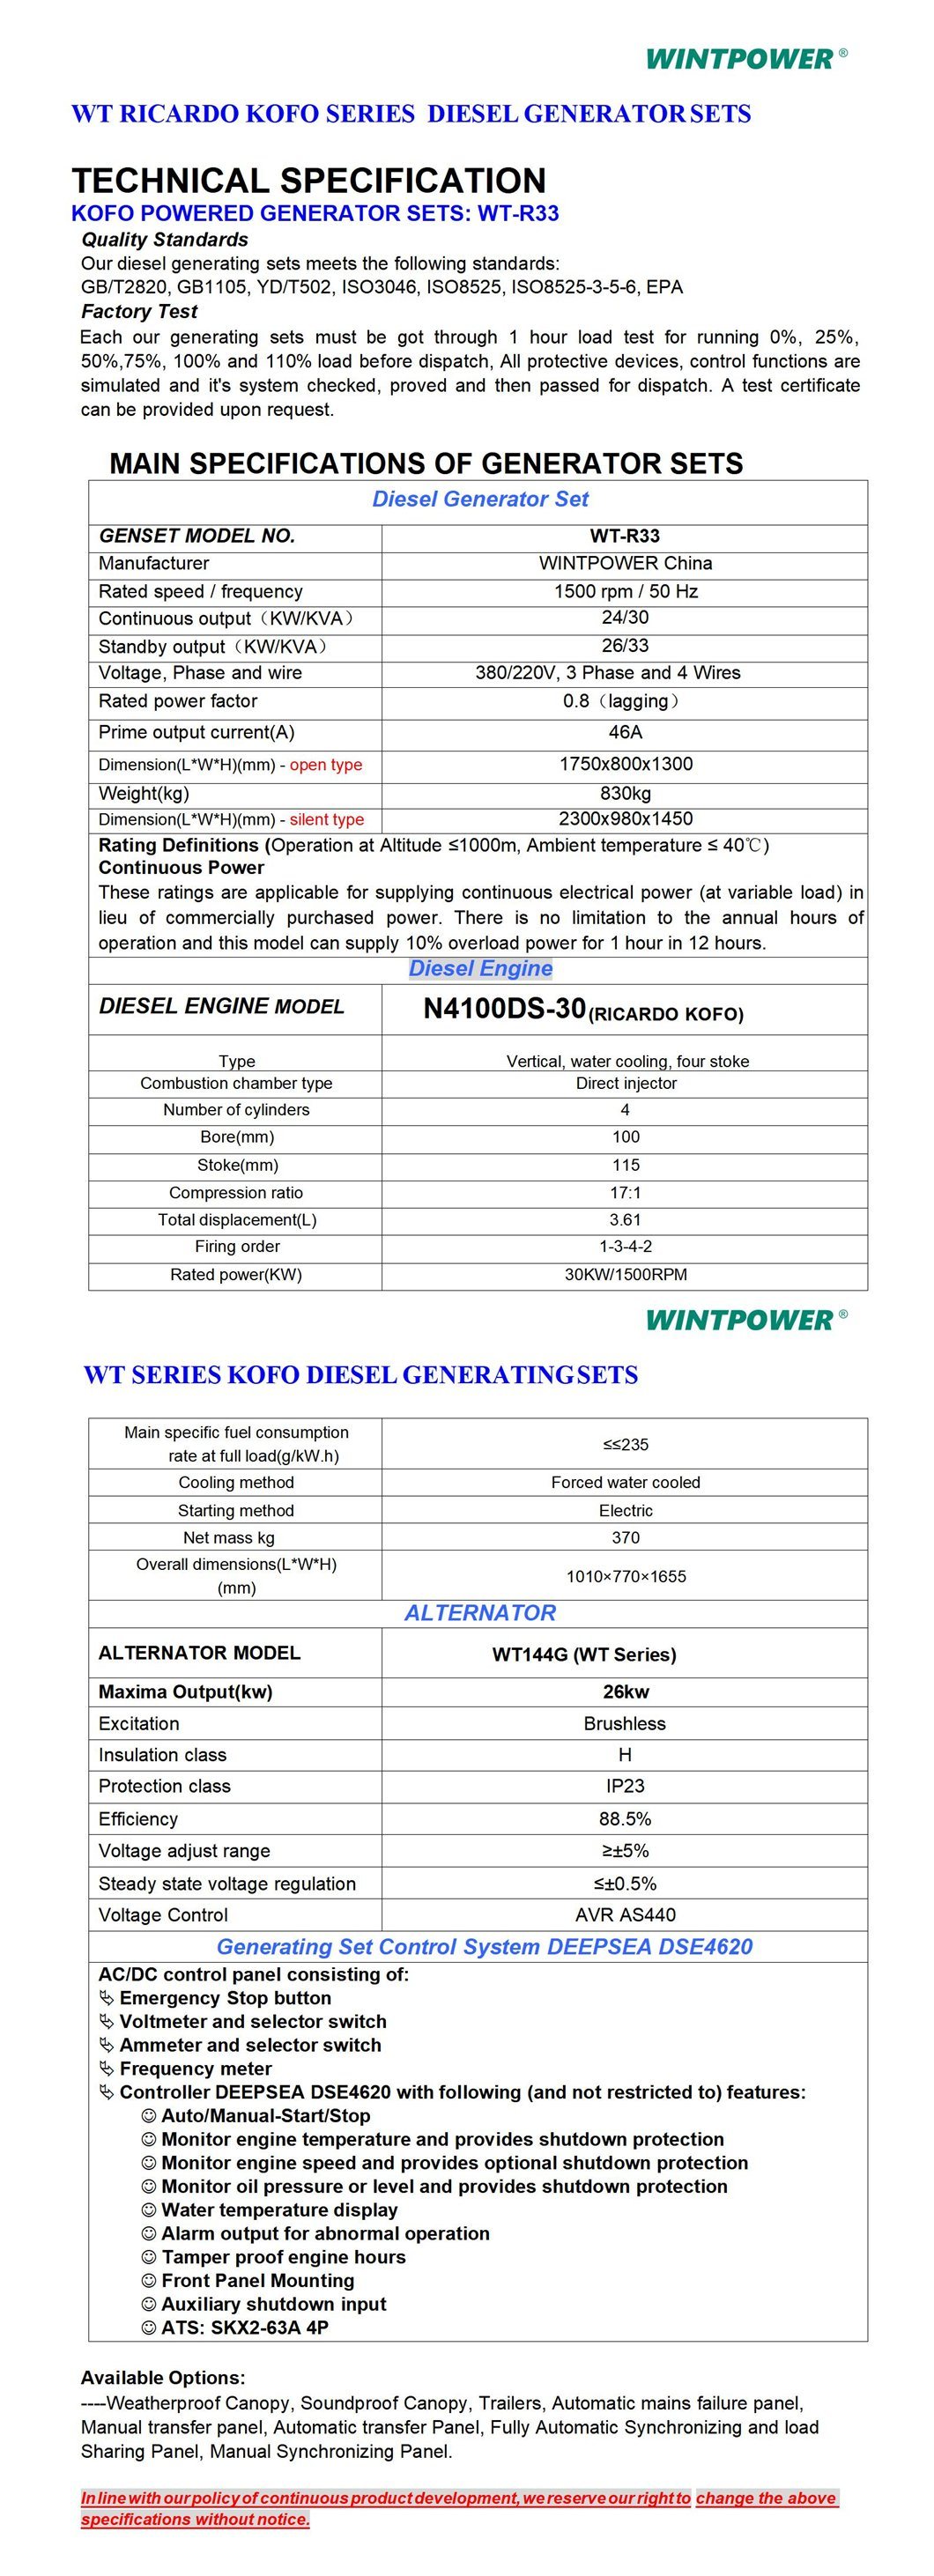 Weichai Kofo Ricardo Diesel Power Generator Set Dg Genset 30kVA N4100ds-30 40kVA N4105ds-38 50kVA N4105ds-42 60kVA N4105zds 75kVA N4105zds 803kVA R41